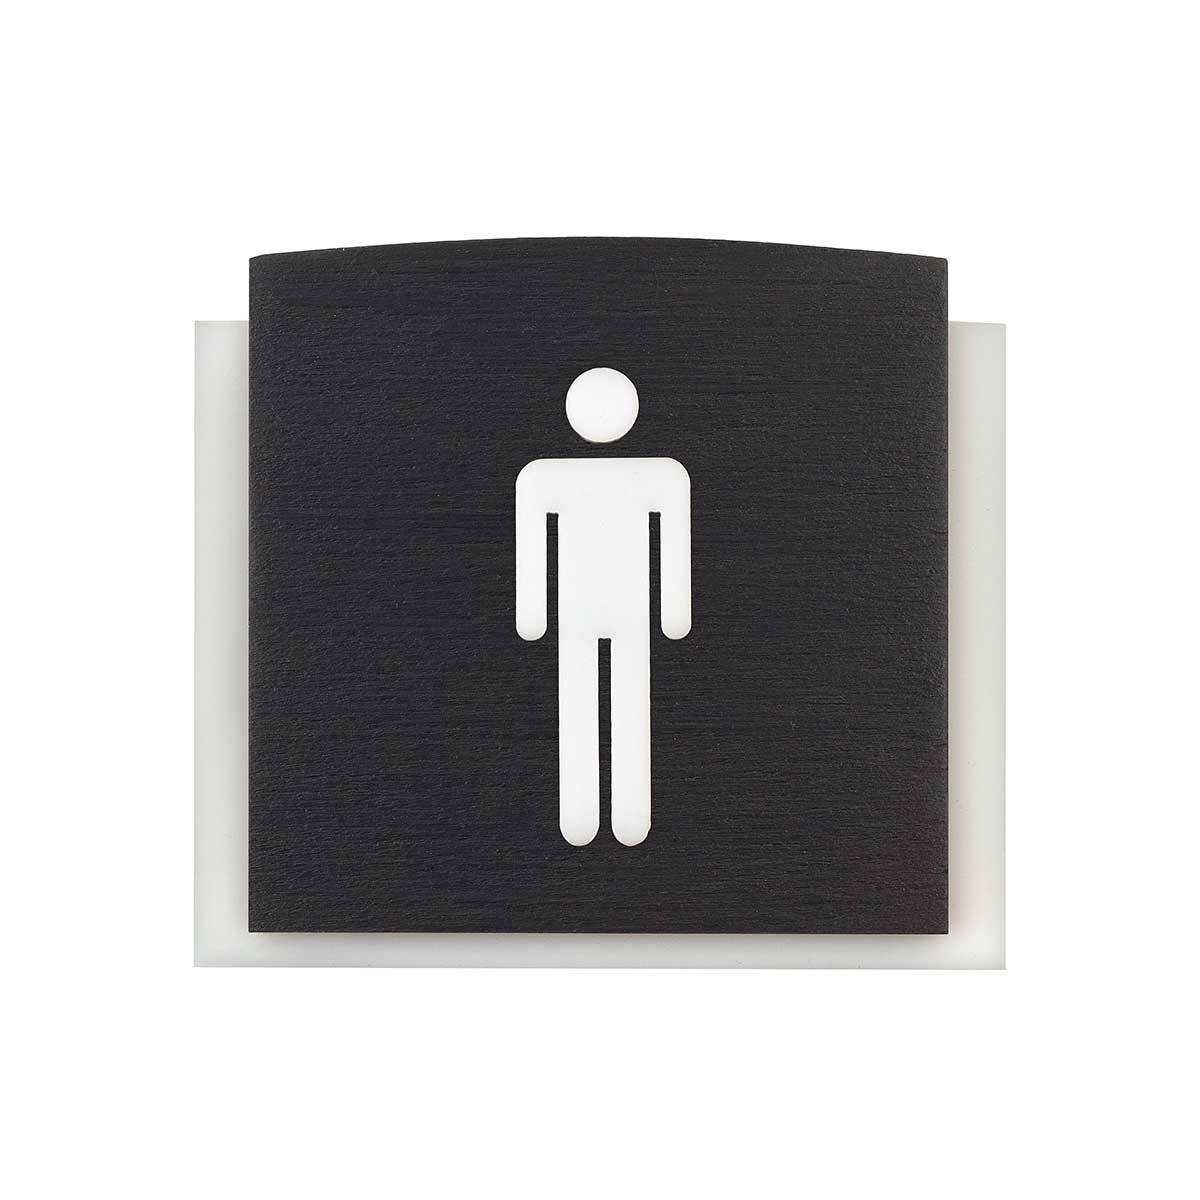 Wood Bathrooms Door Signs for Man Bathroom Signs Indian Rosewood Bsign